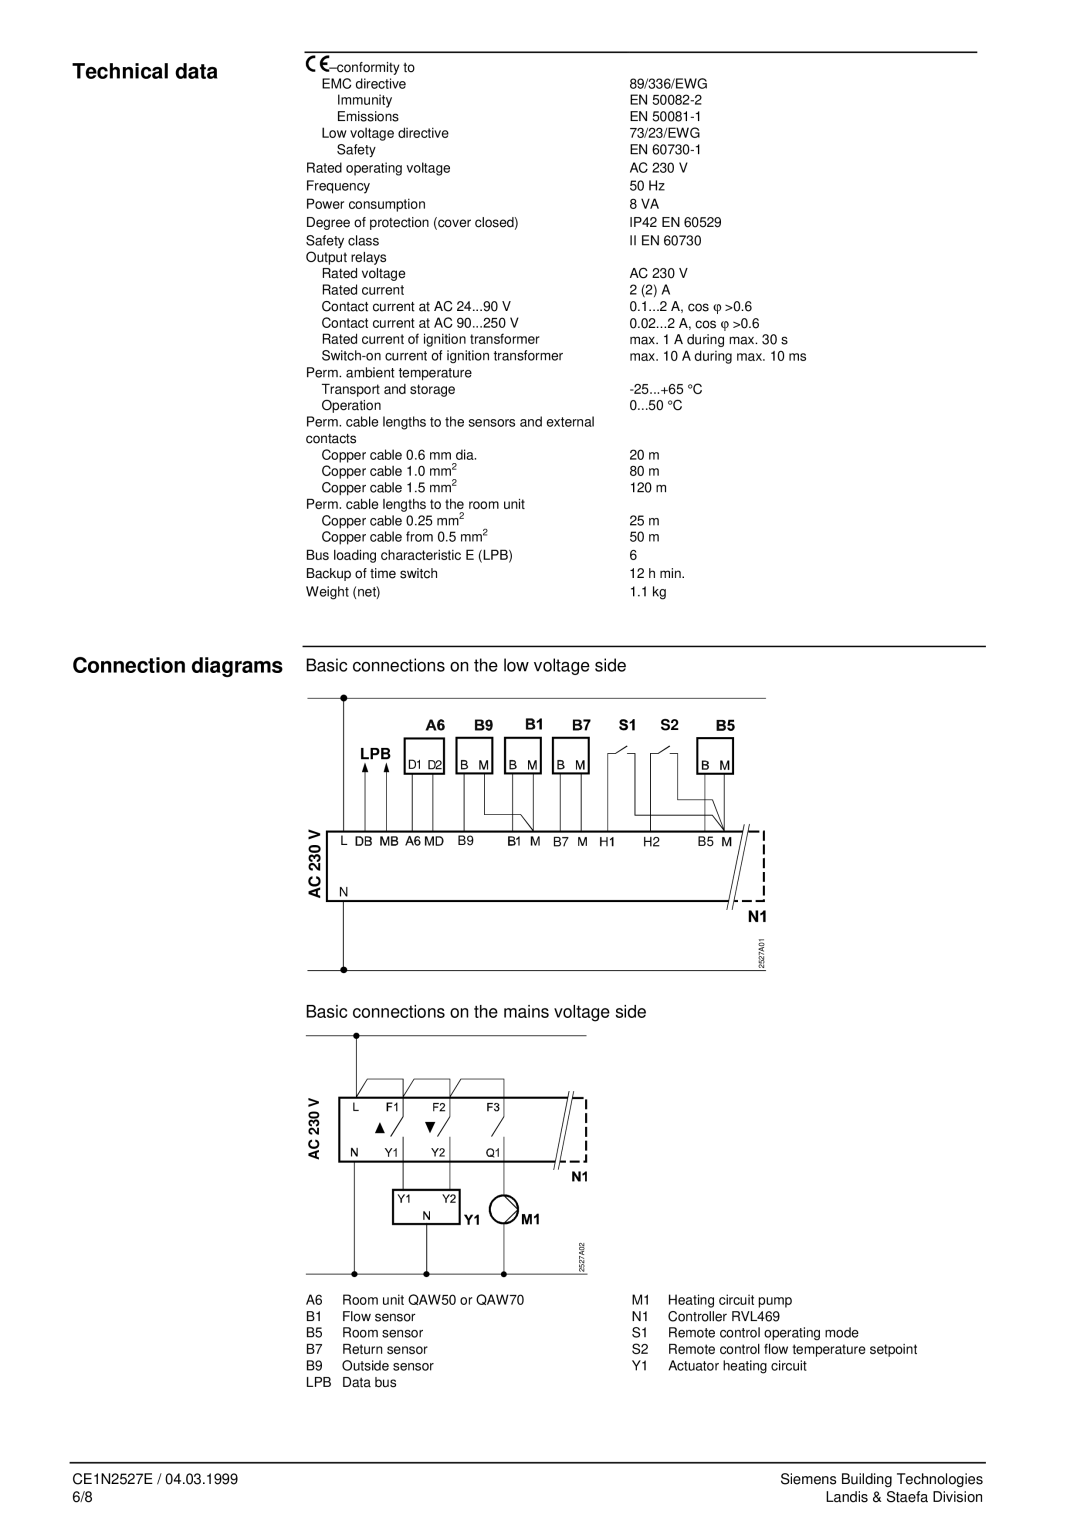 LG Electronics RVL469 manual Technical data, AC 230, CE1N2527E, Siemens Building Technologies, Landis & Staefa Division 